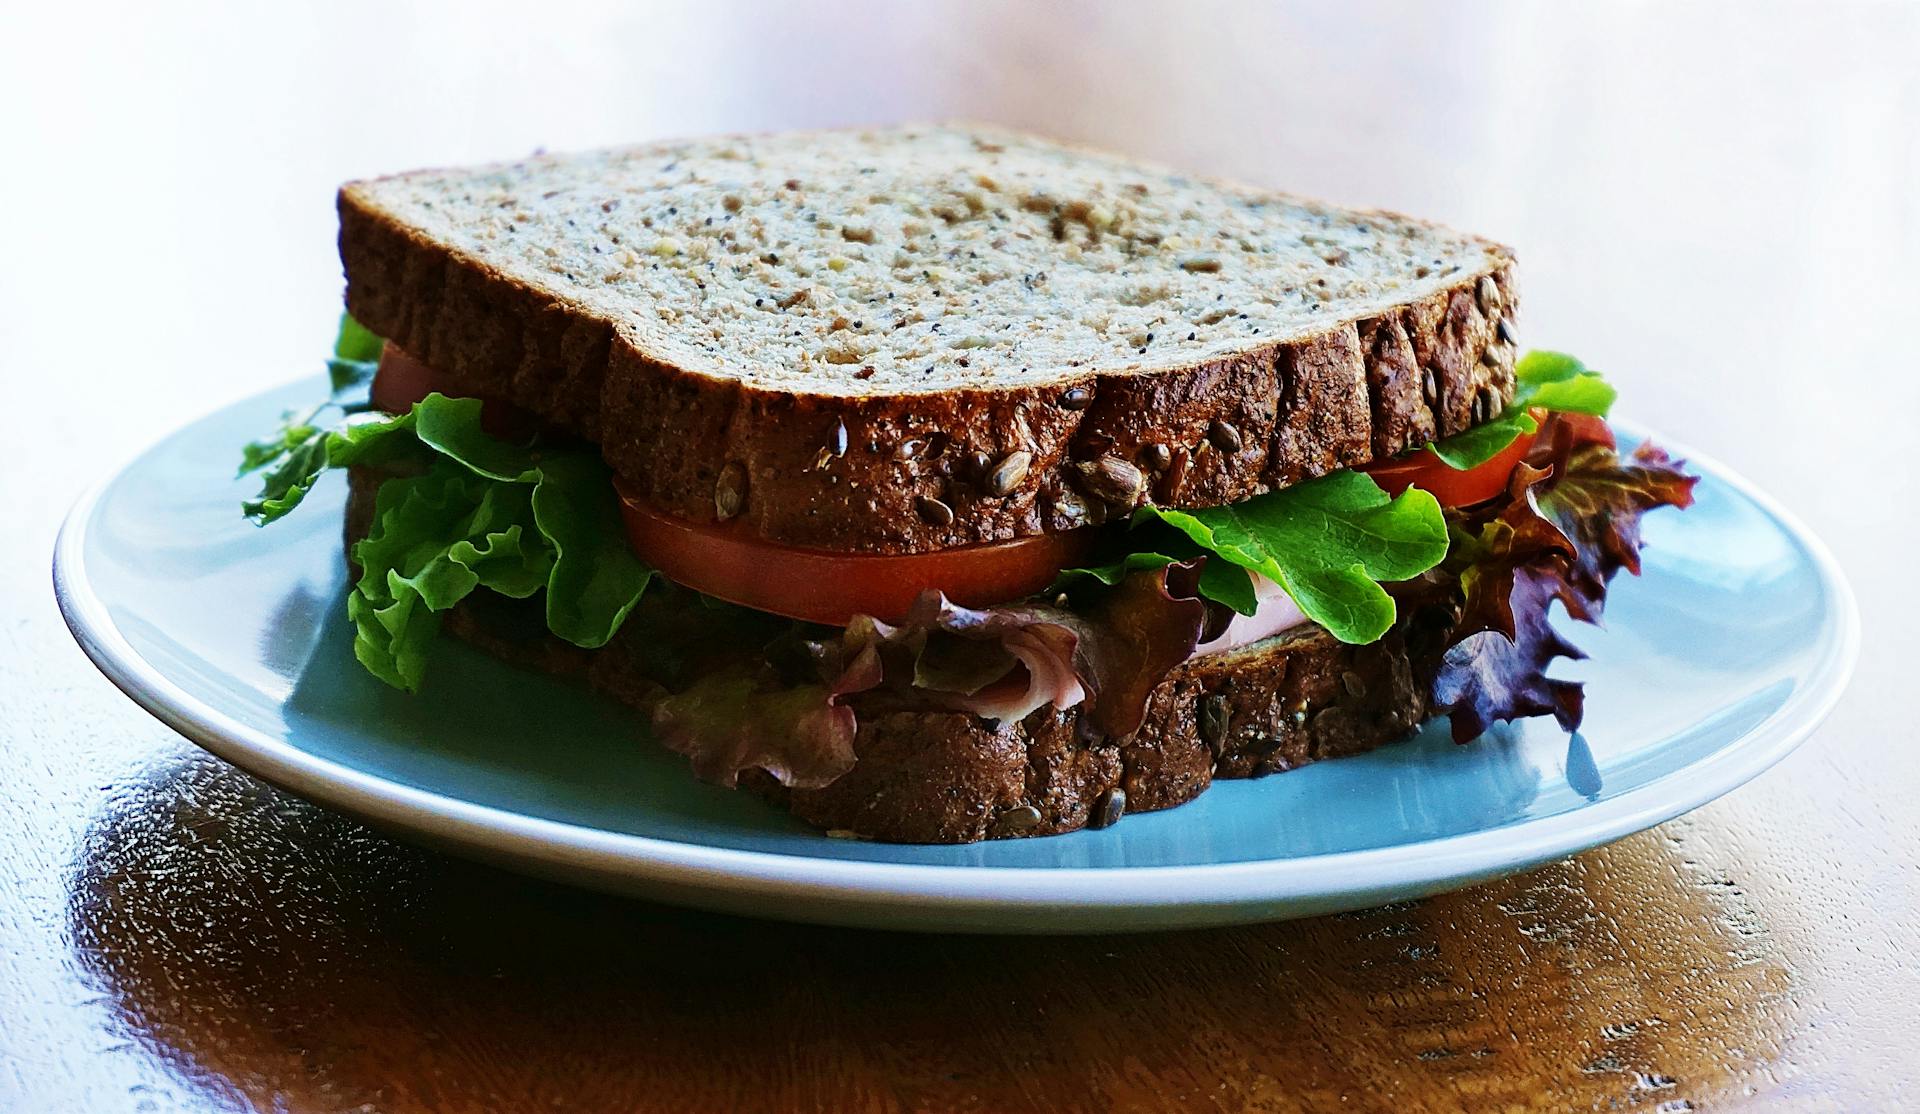 A sandwich on a plate | Source: Pexels